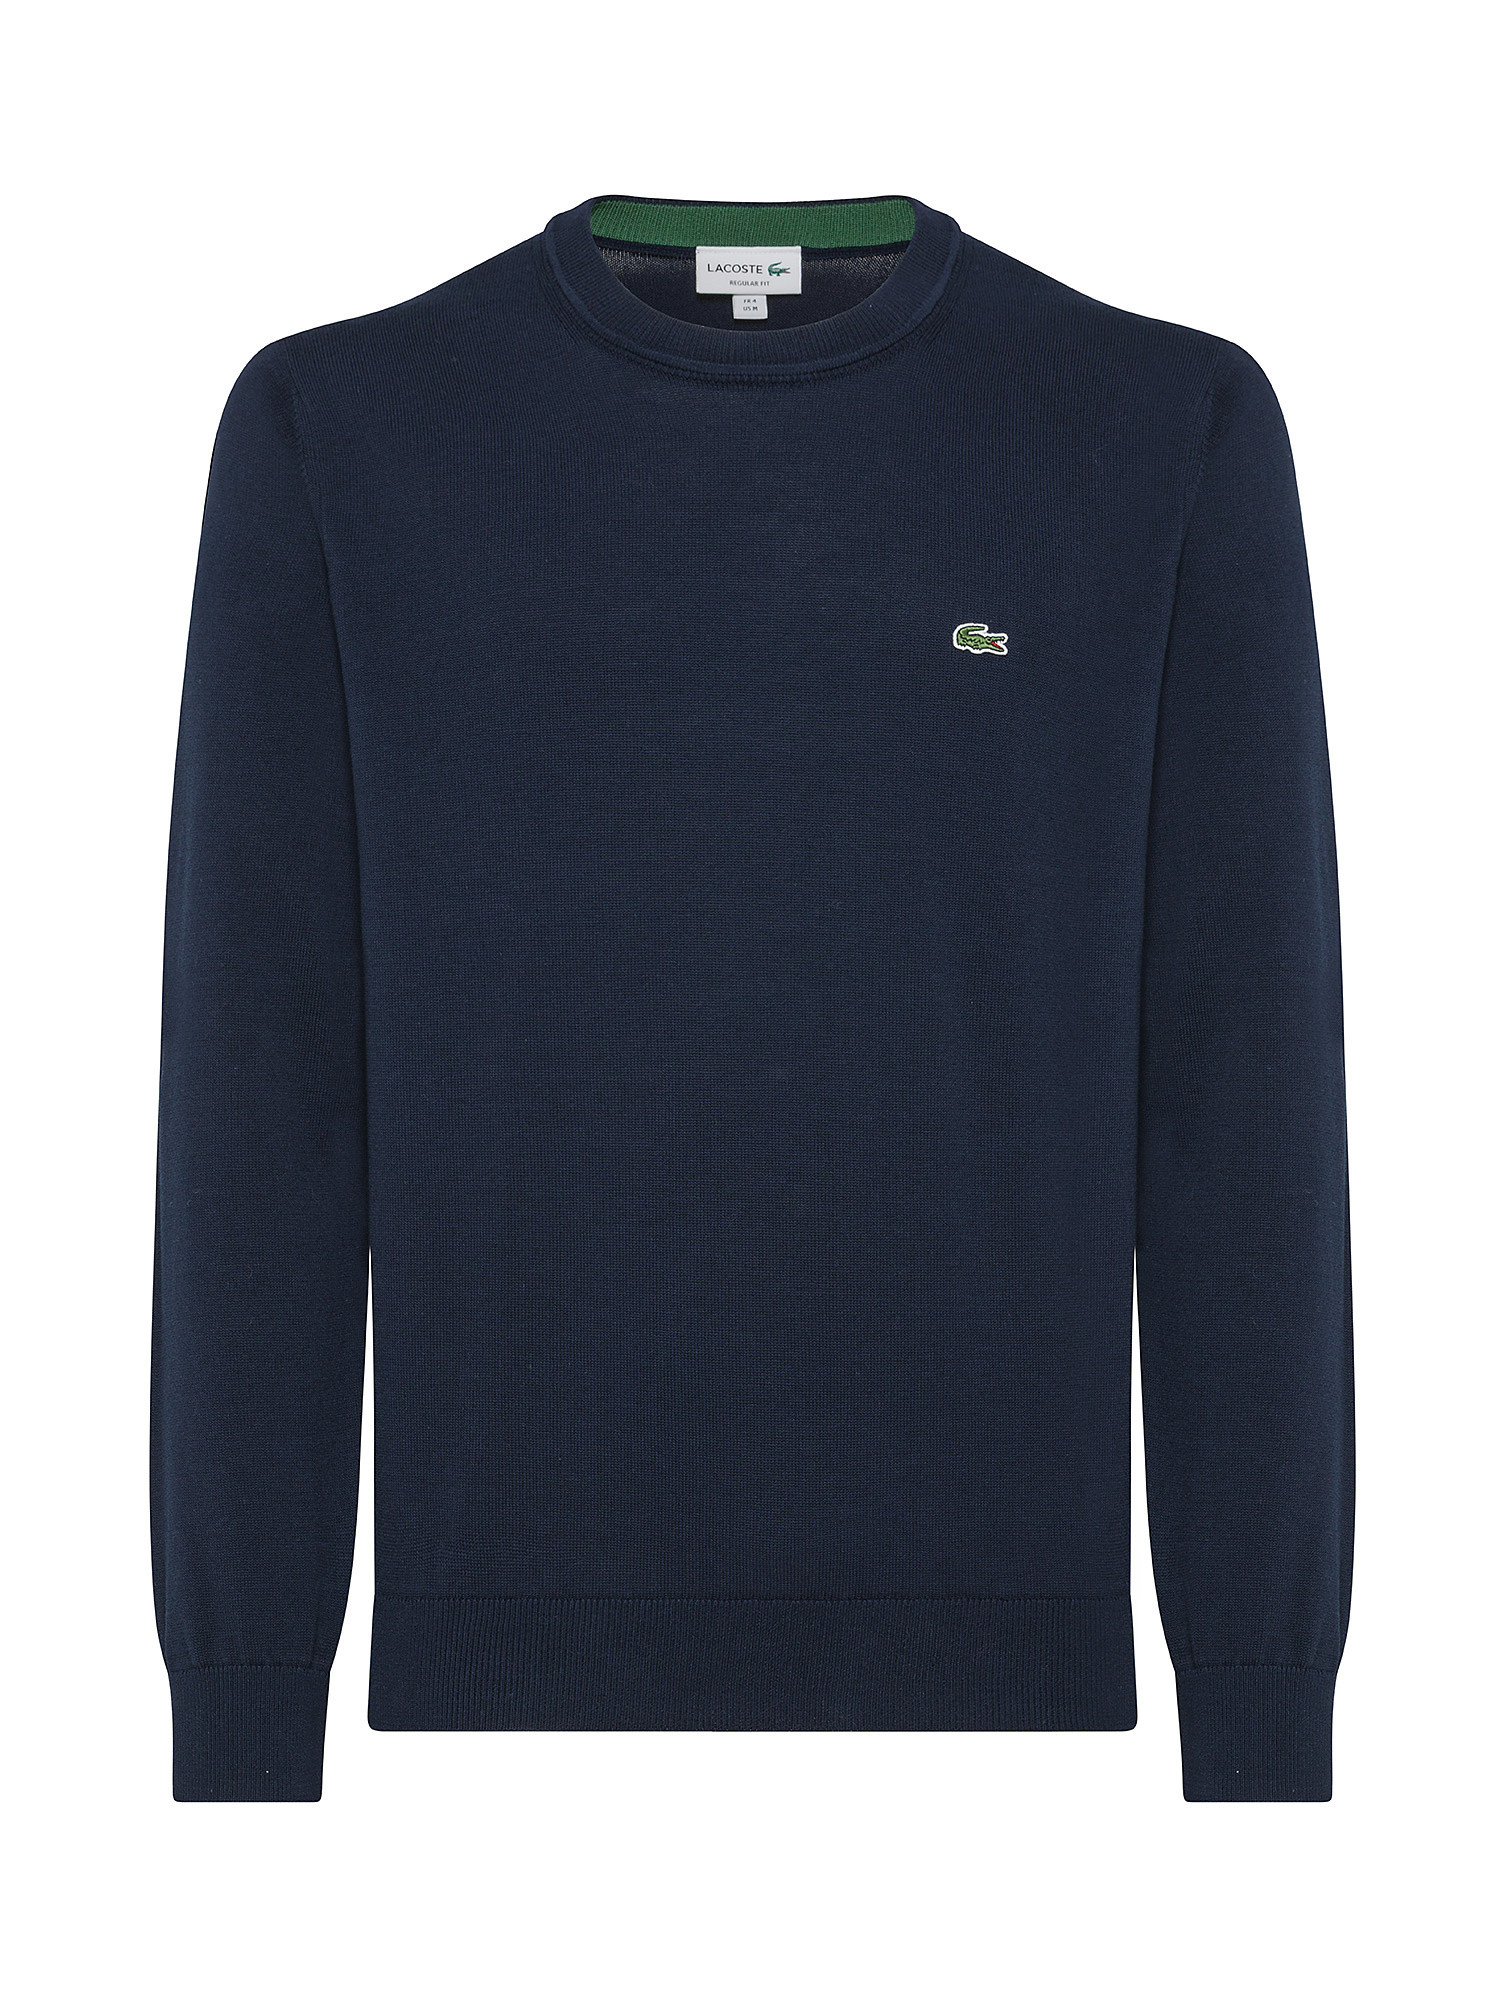 Lacoste - Cotton crewneck sweater, Dark Blue, large image number 0